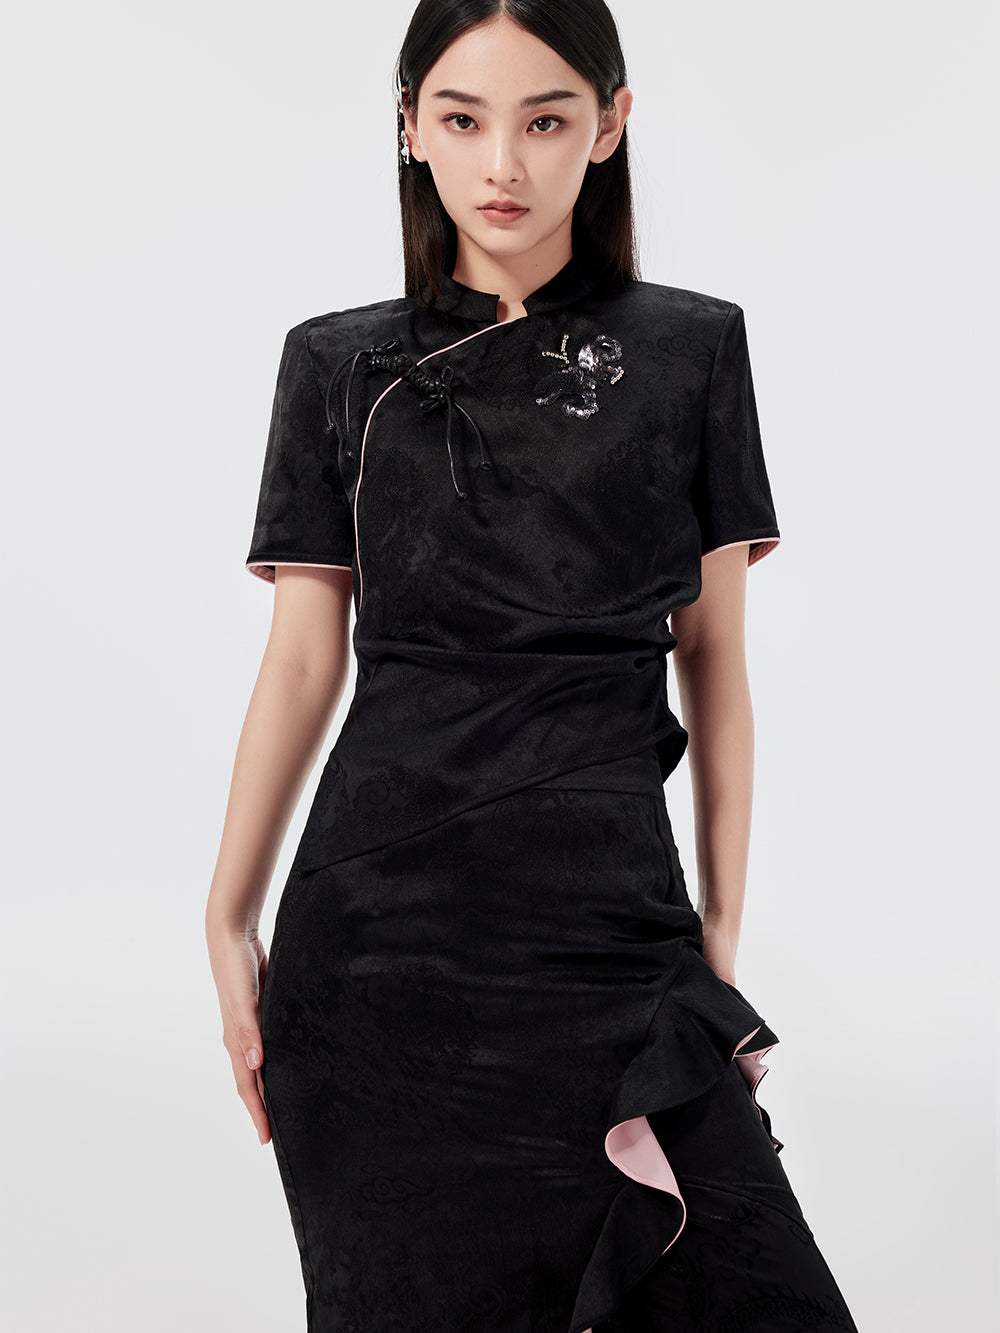 MUKZIN Black Slim Fit Jacquard Sequined Chinese Style Cheongsam T-shirt